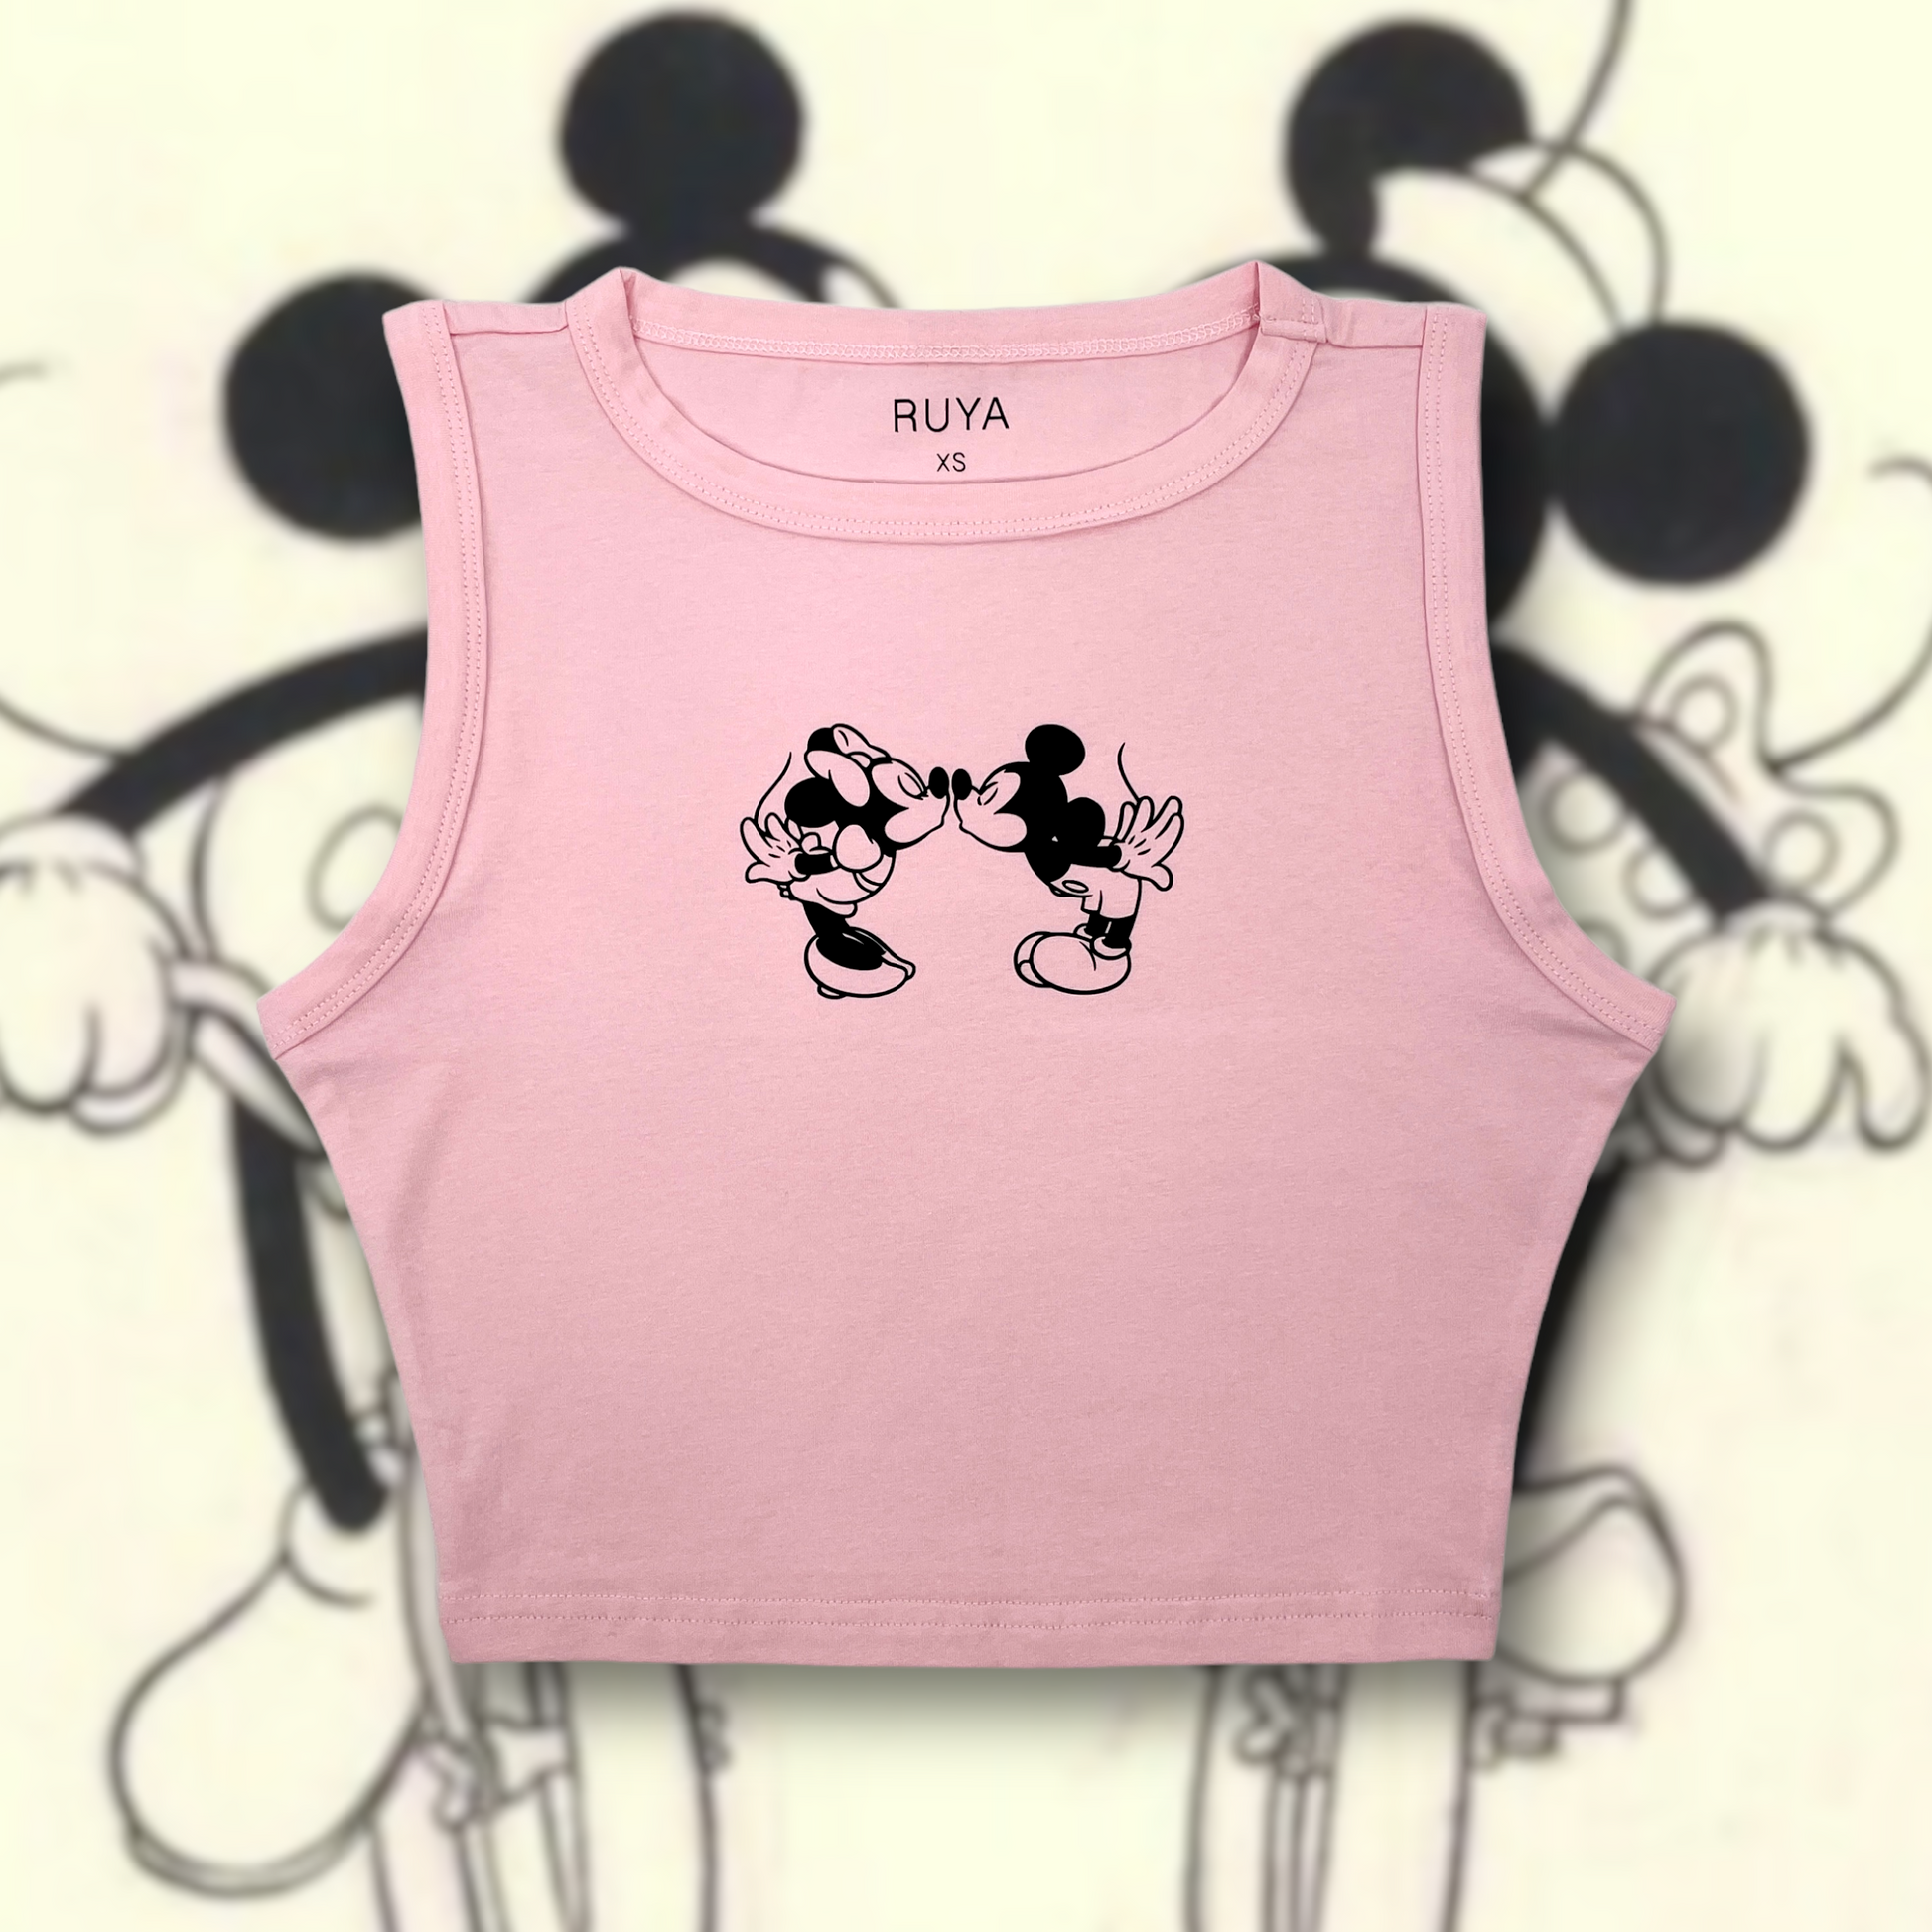 Couples Tee Crop Tank Top Disney Shirts Mickey Minnie - Shibtee